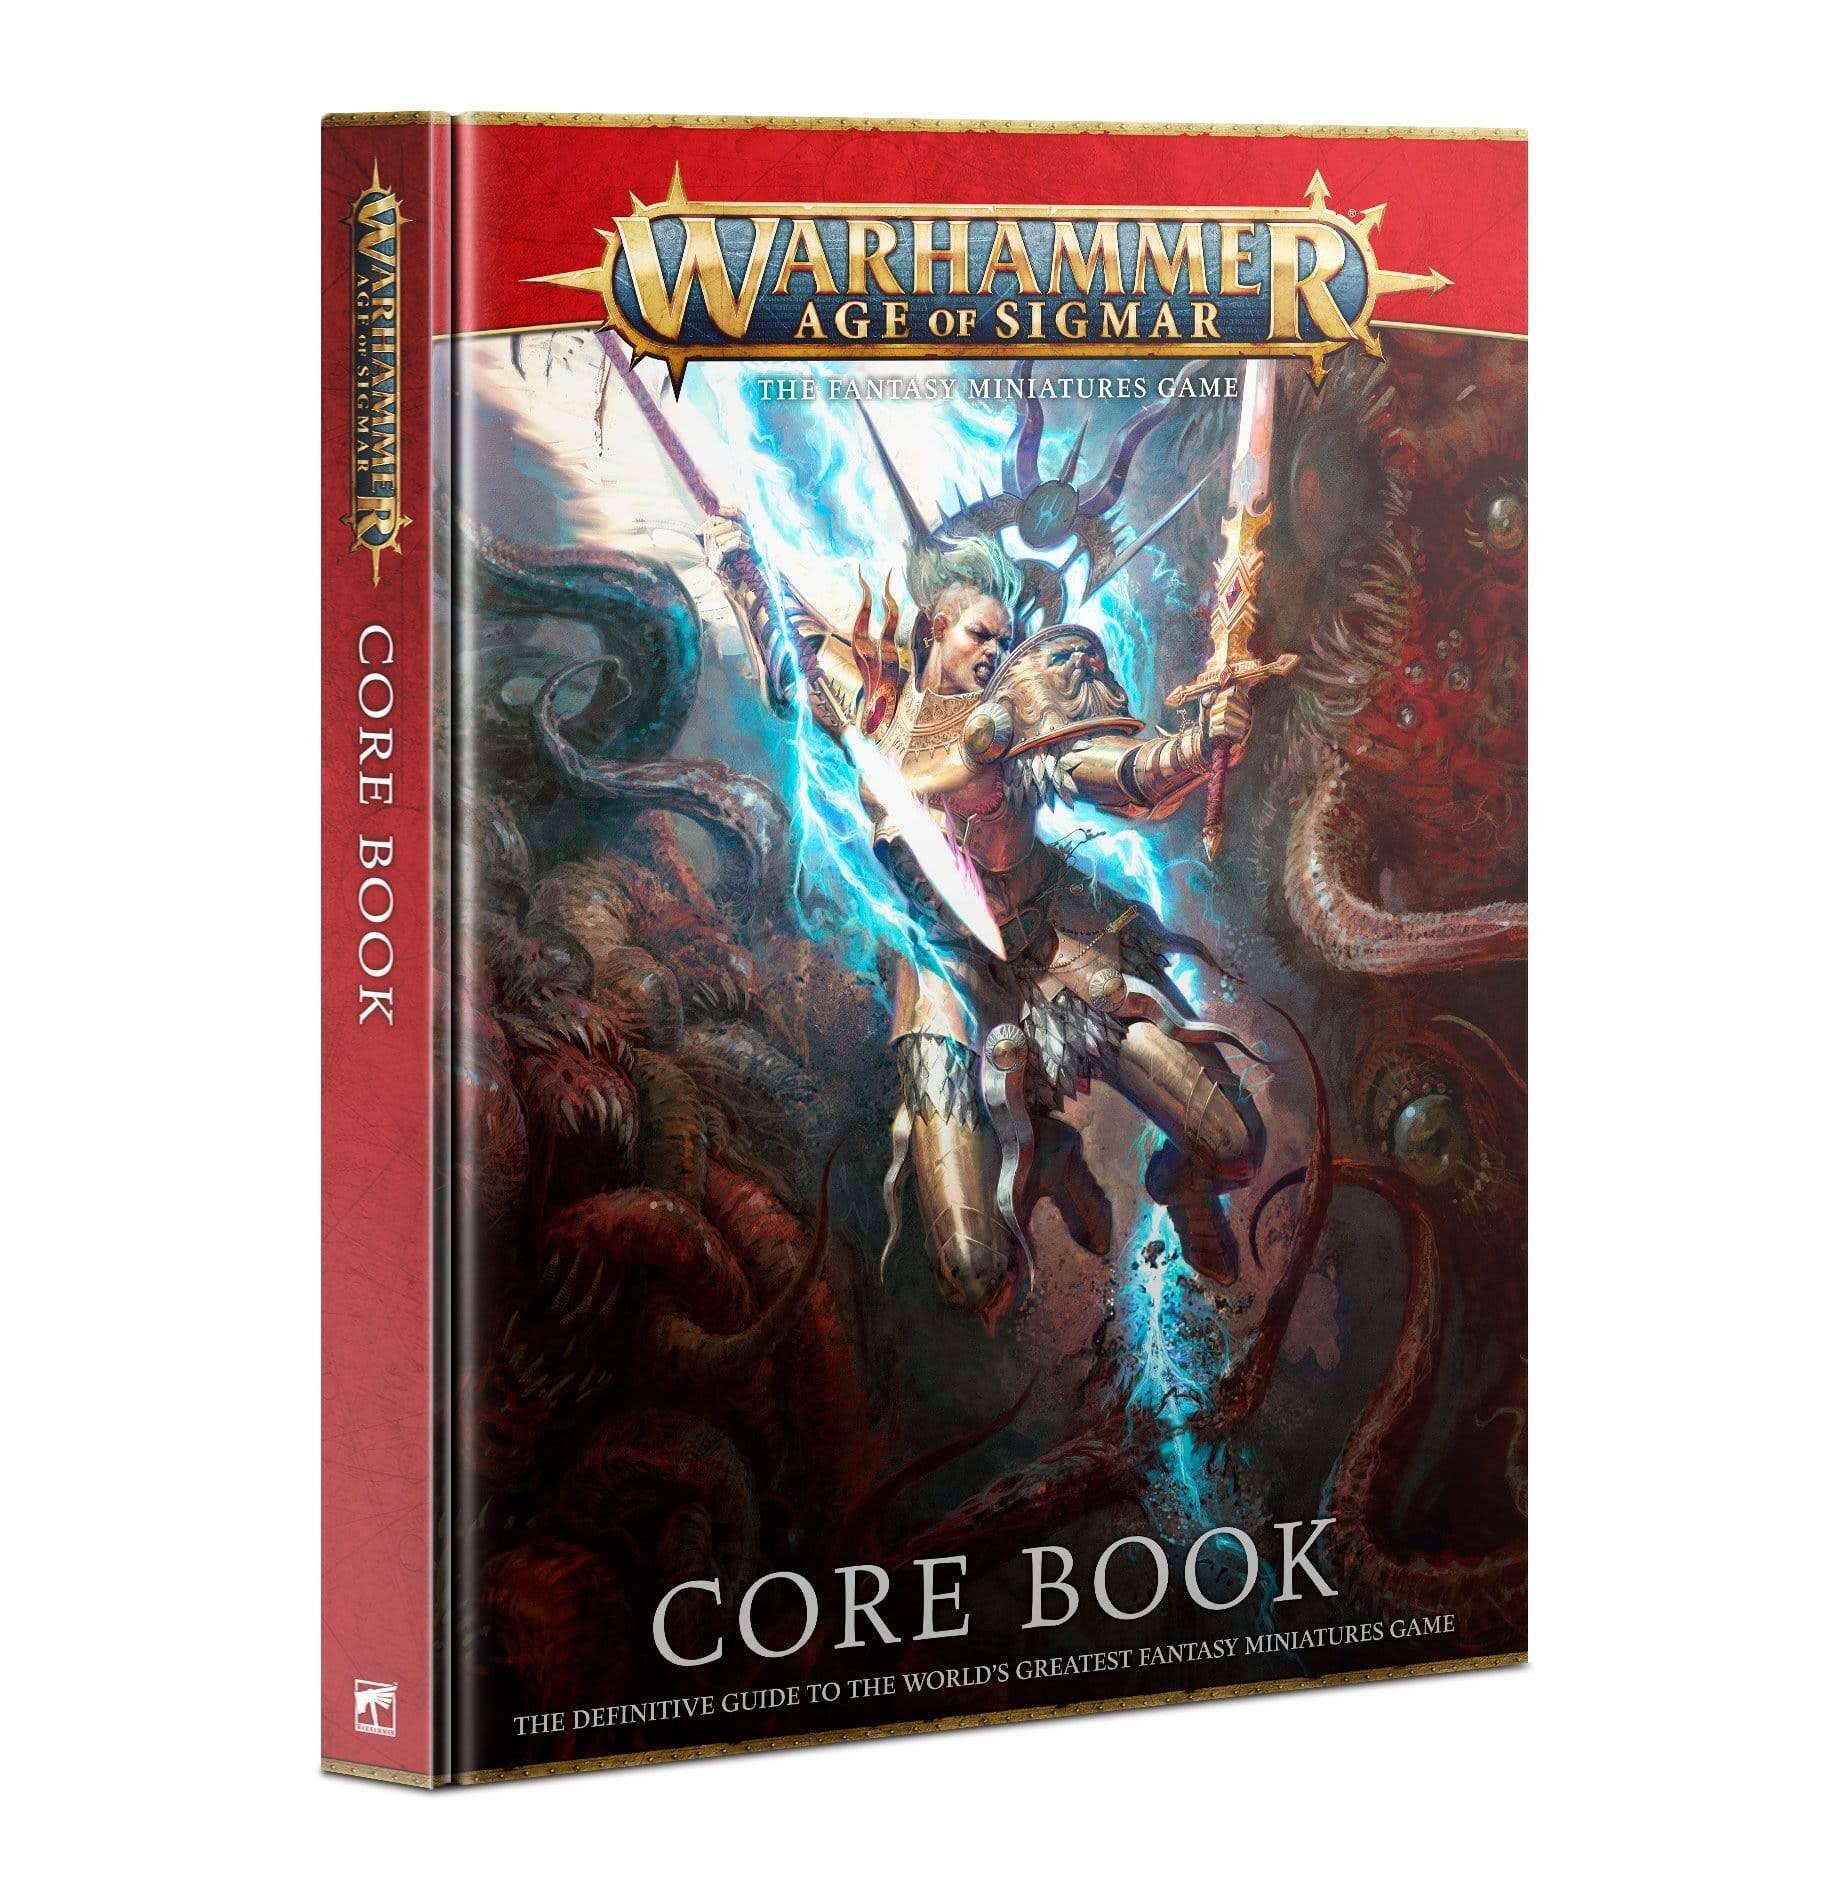 Warhammer Age of Sigmar: Core Book [Book]